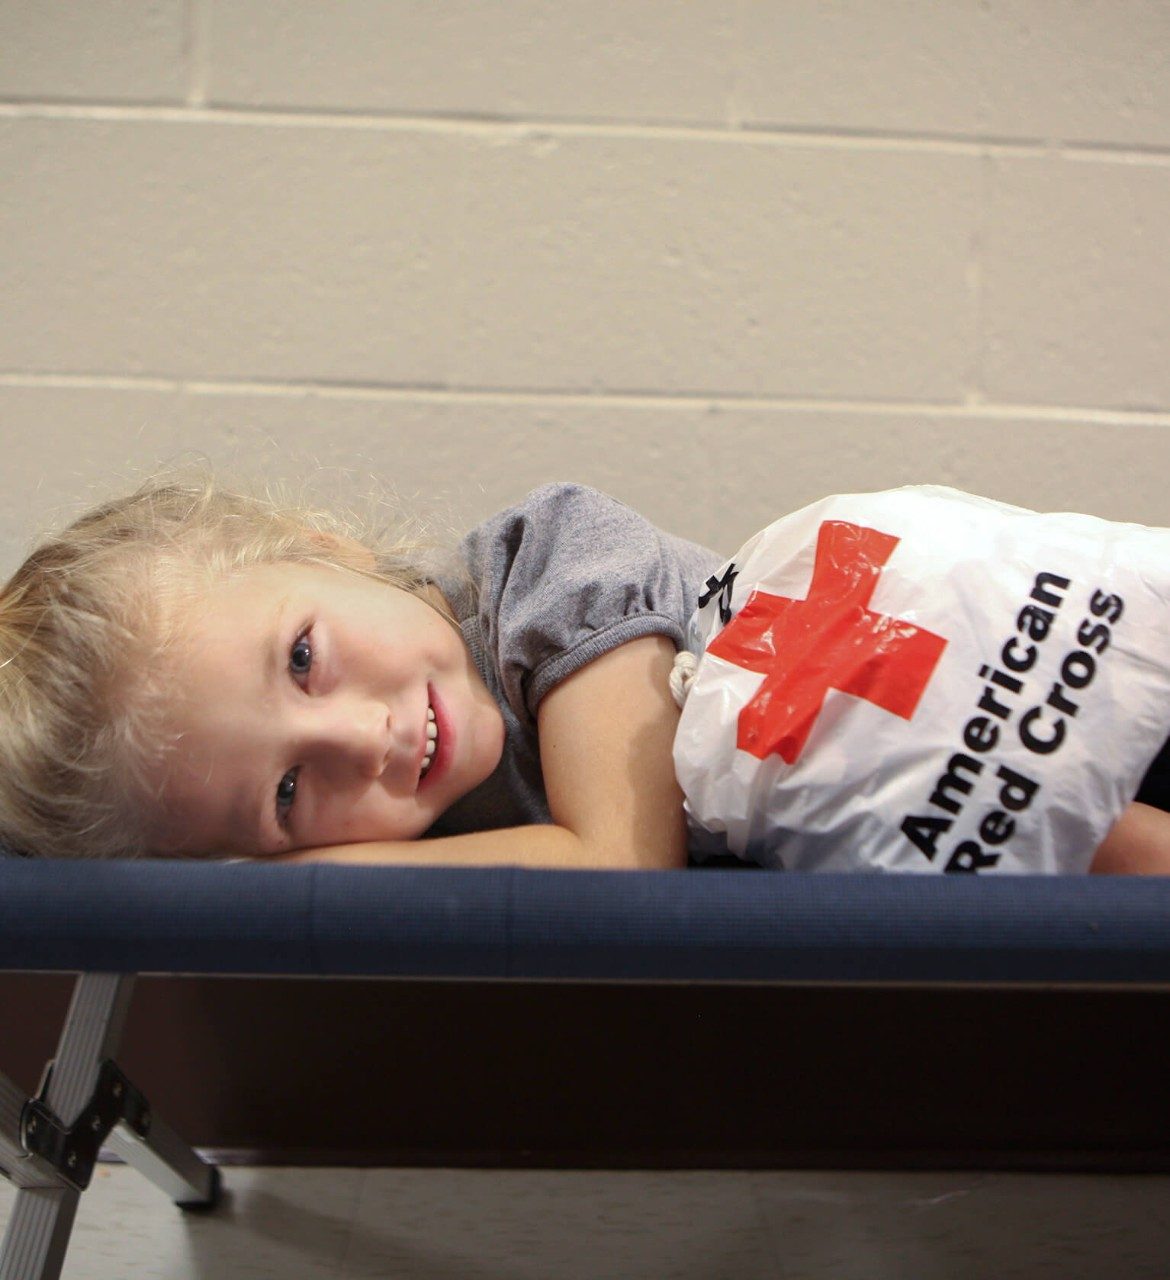 little girl on cot in shelter